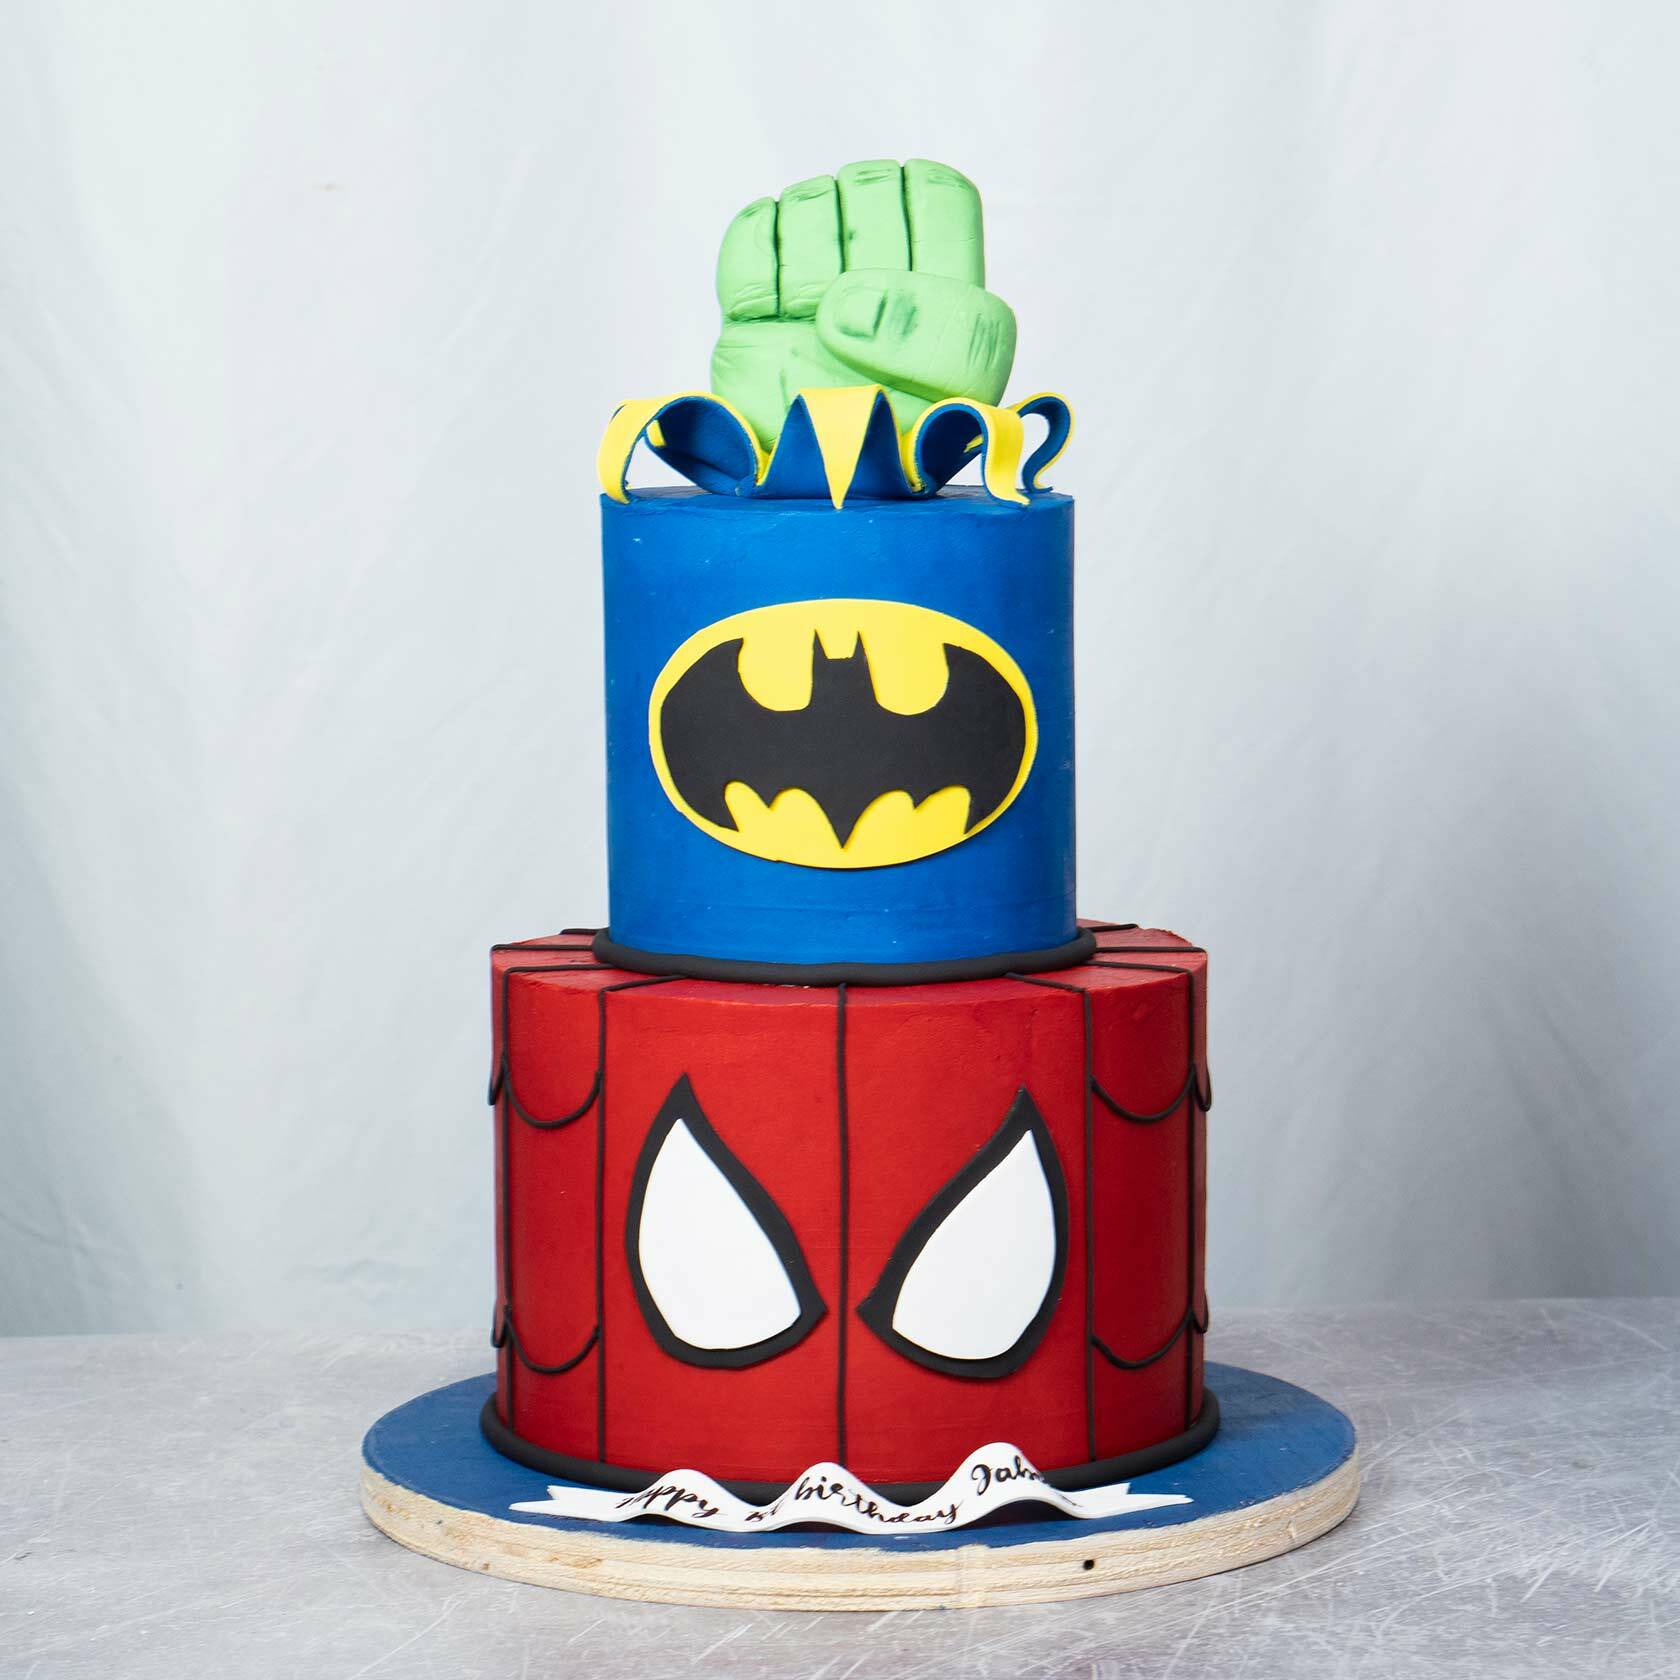 Super hero Hulk, Batman, Spiderman cake